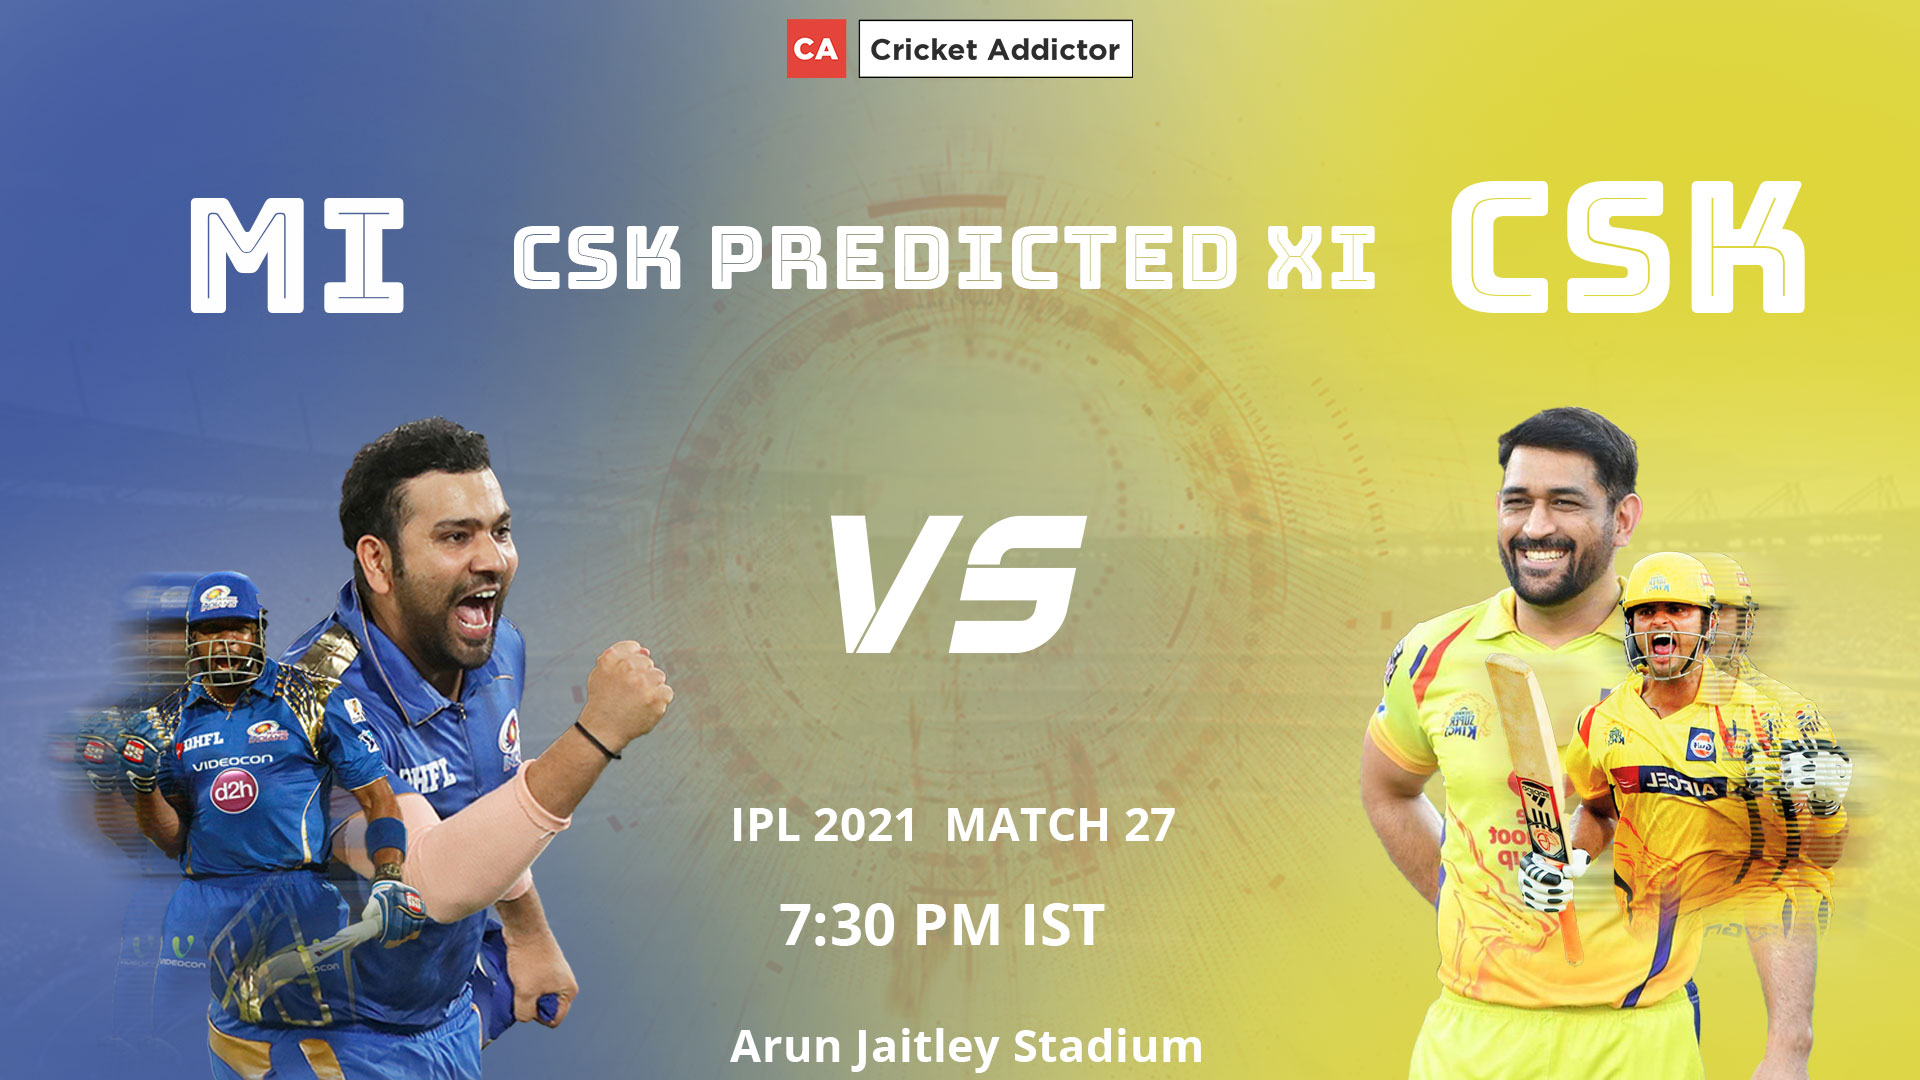 IPL 2021, CSK, Predicted playing XI, playing XI, Chennai Super Kings, MI vs CSK